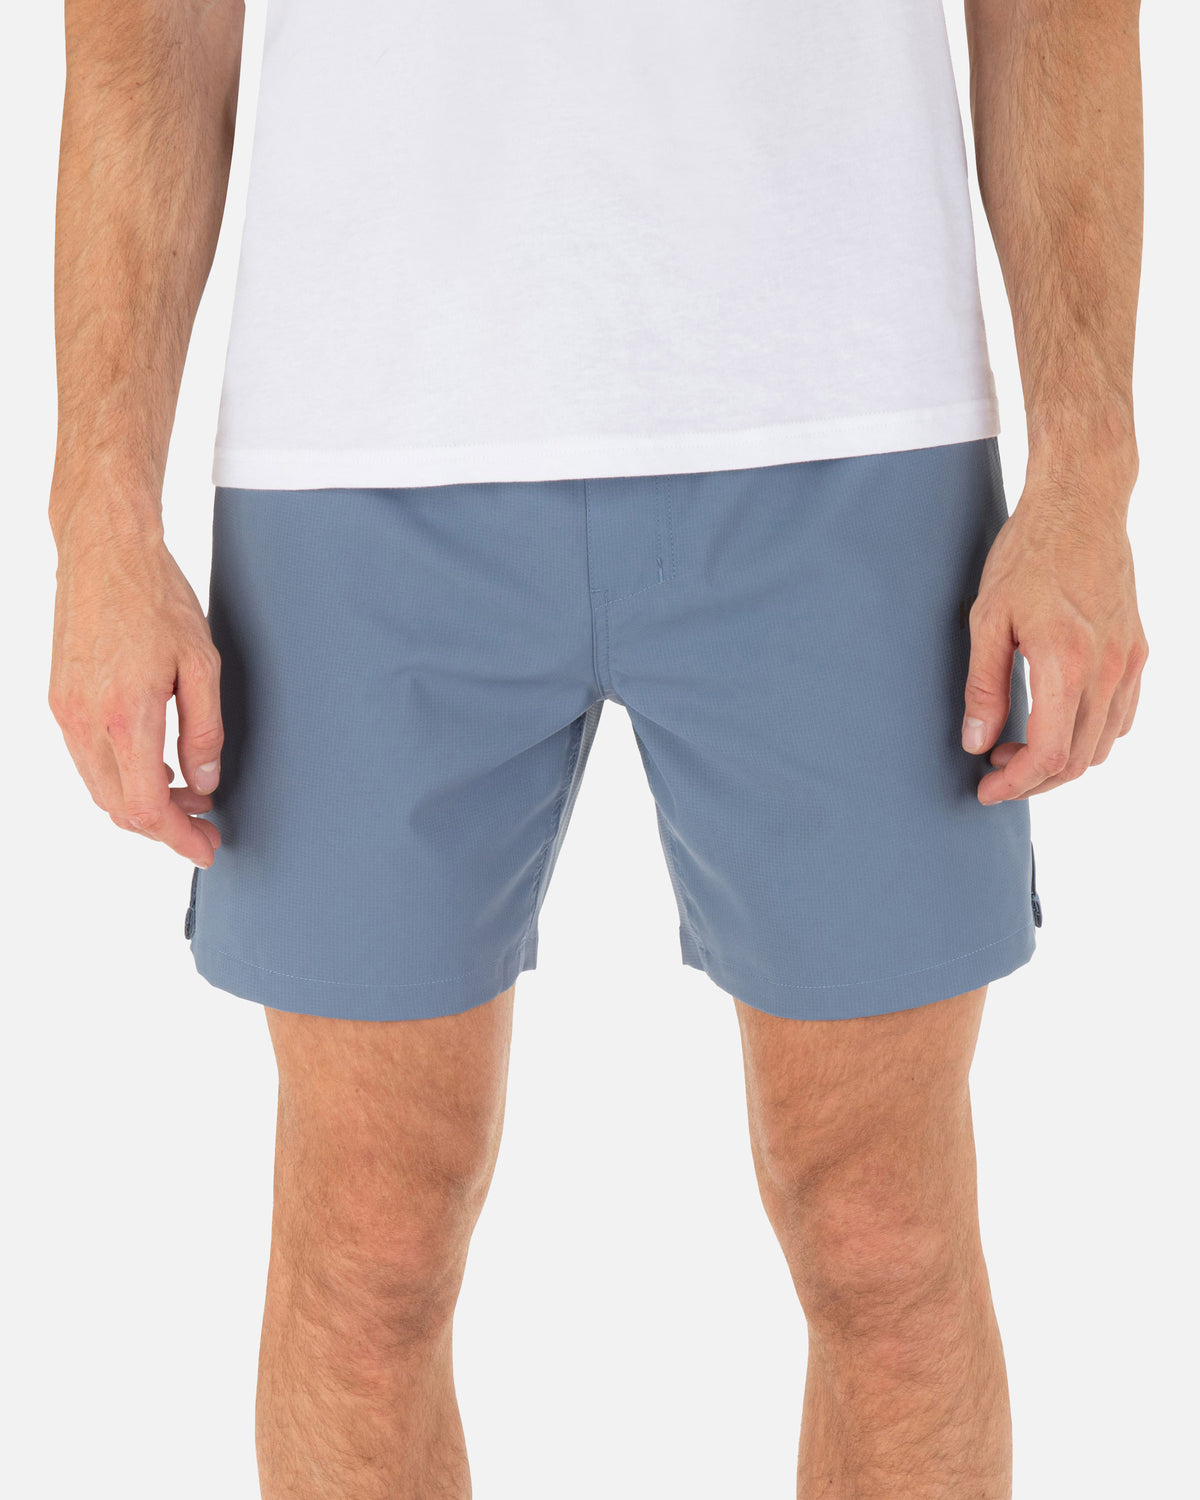 Men's Shorts & Walkshorts | Hurley